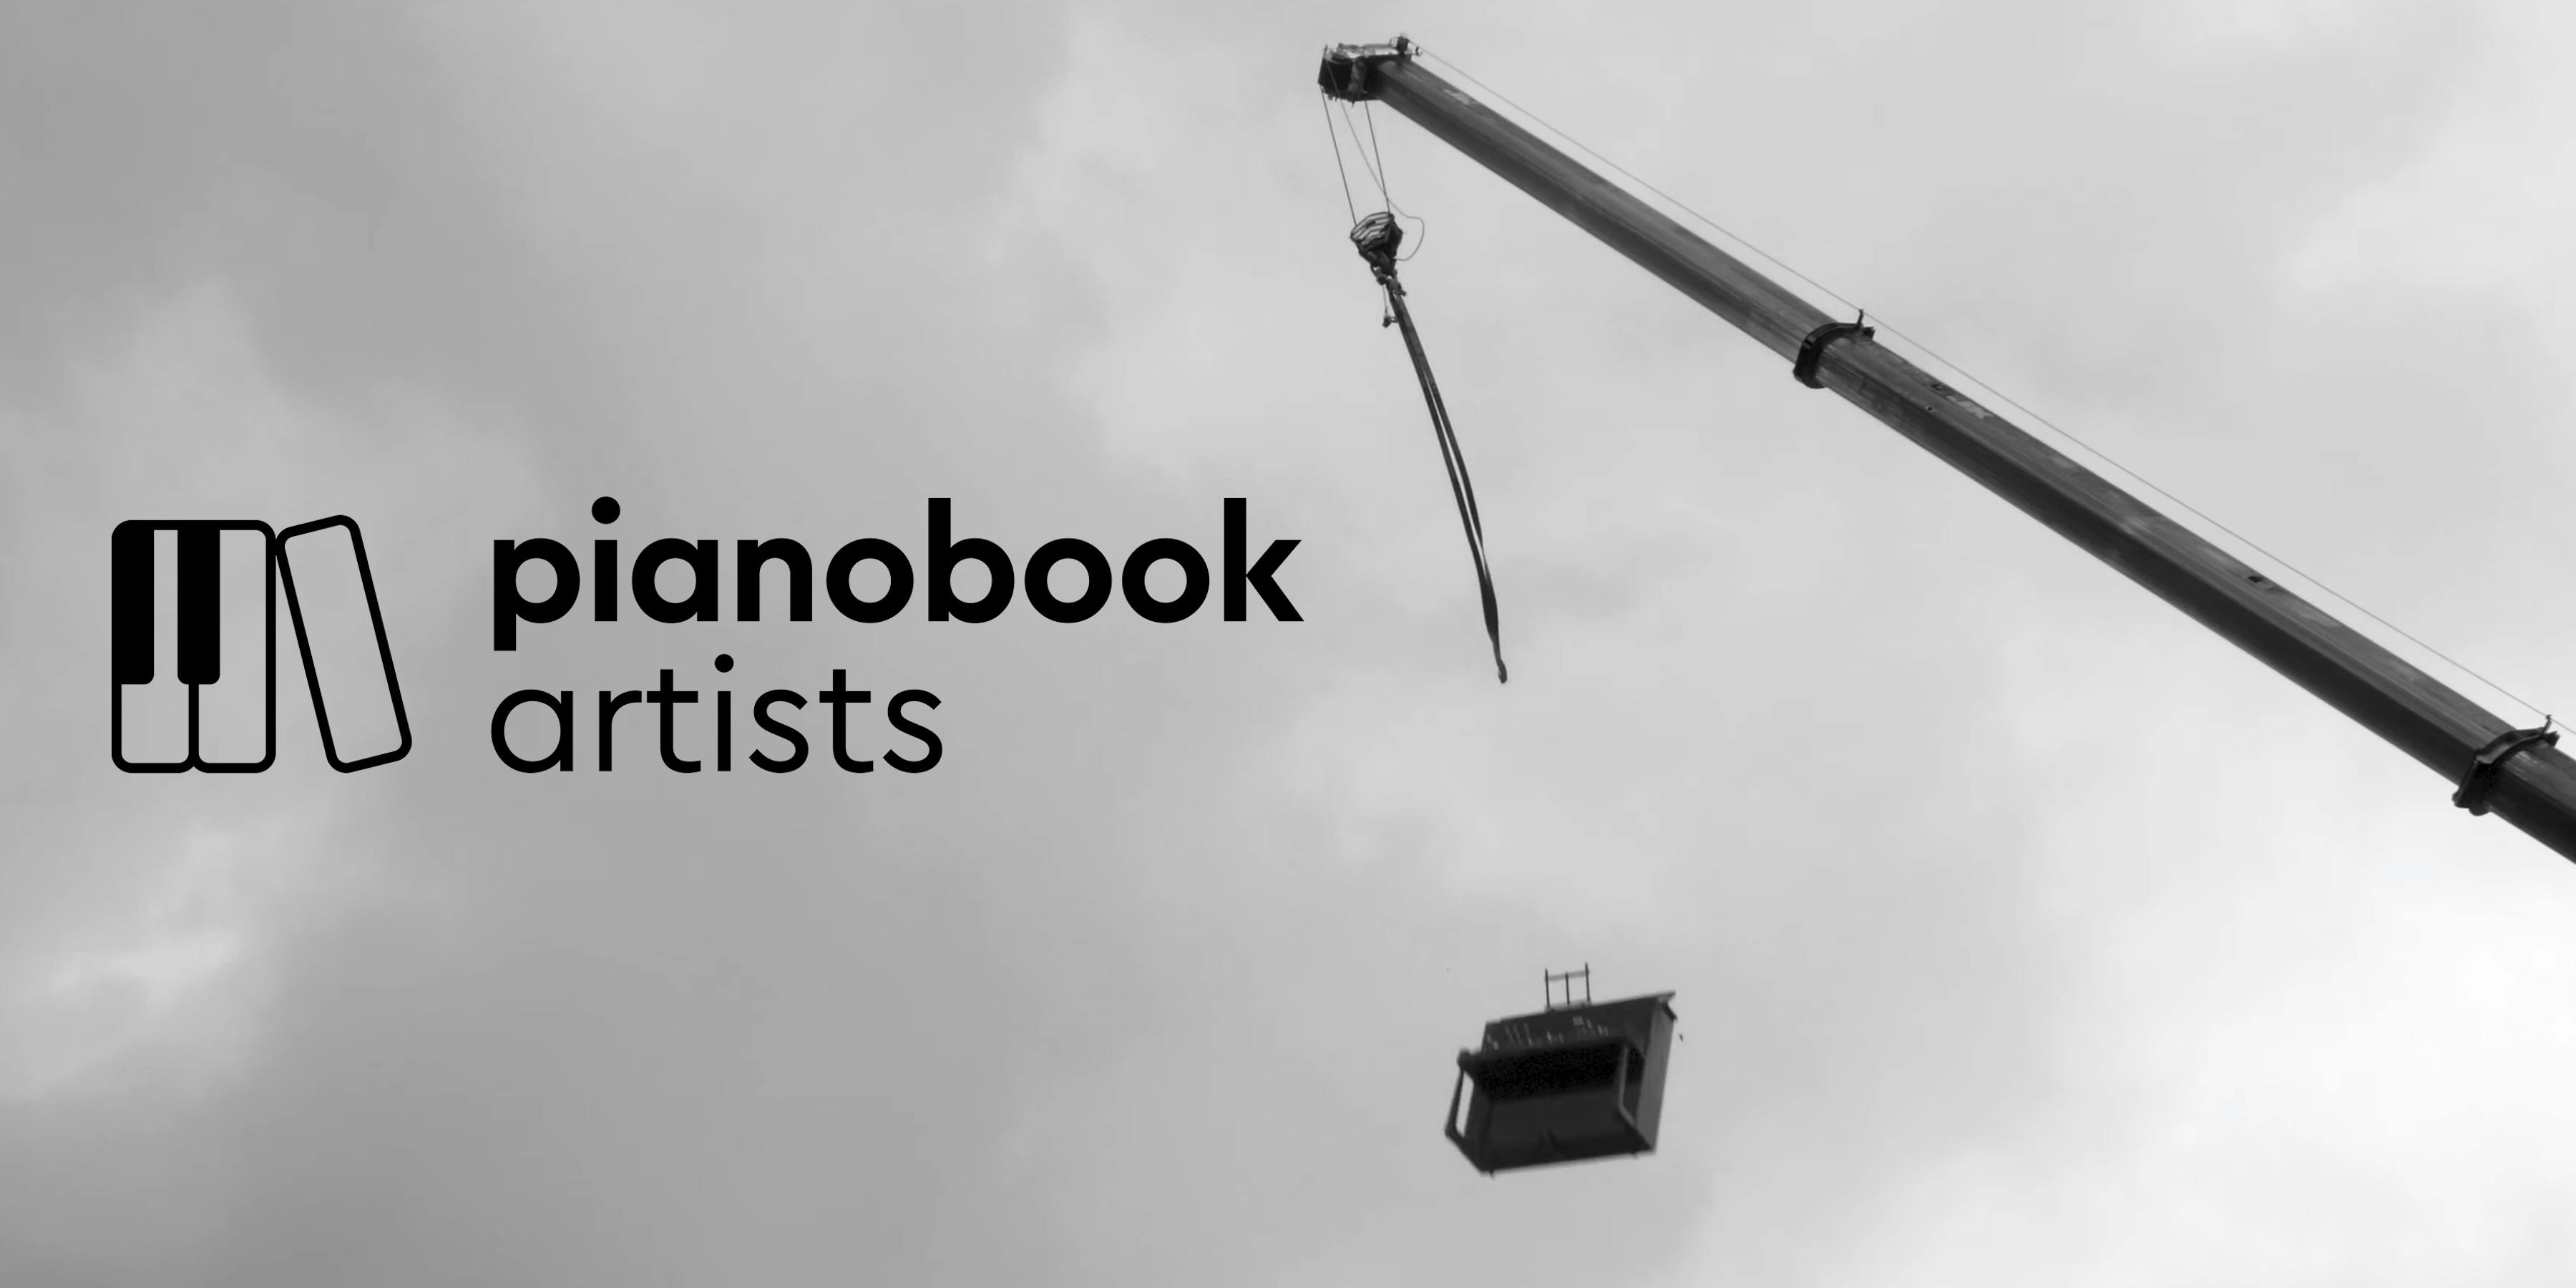 Pianobook artists artwork